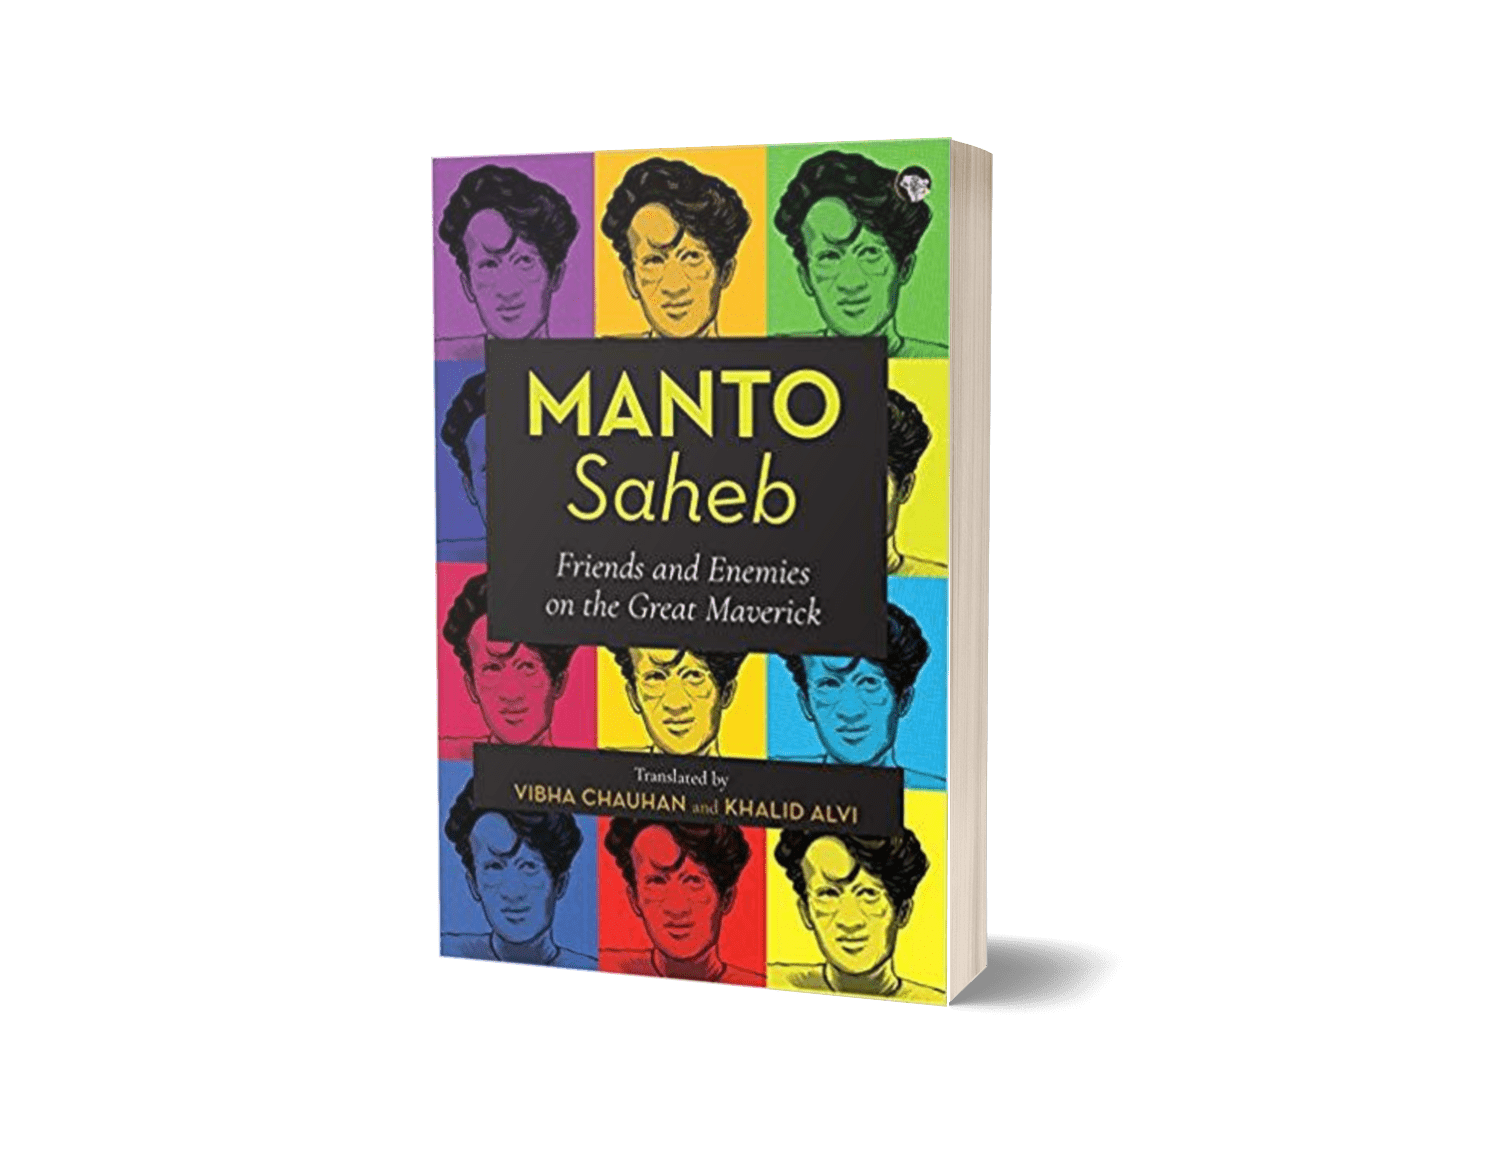 Manto Saheb by Khalid Alvi